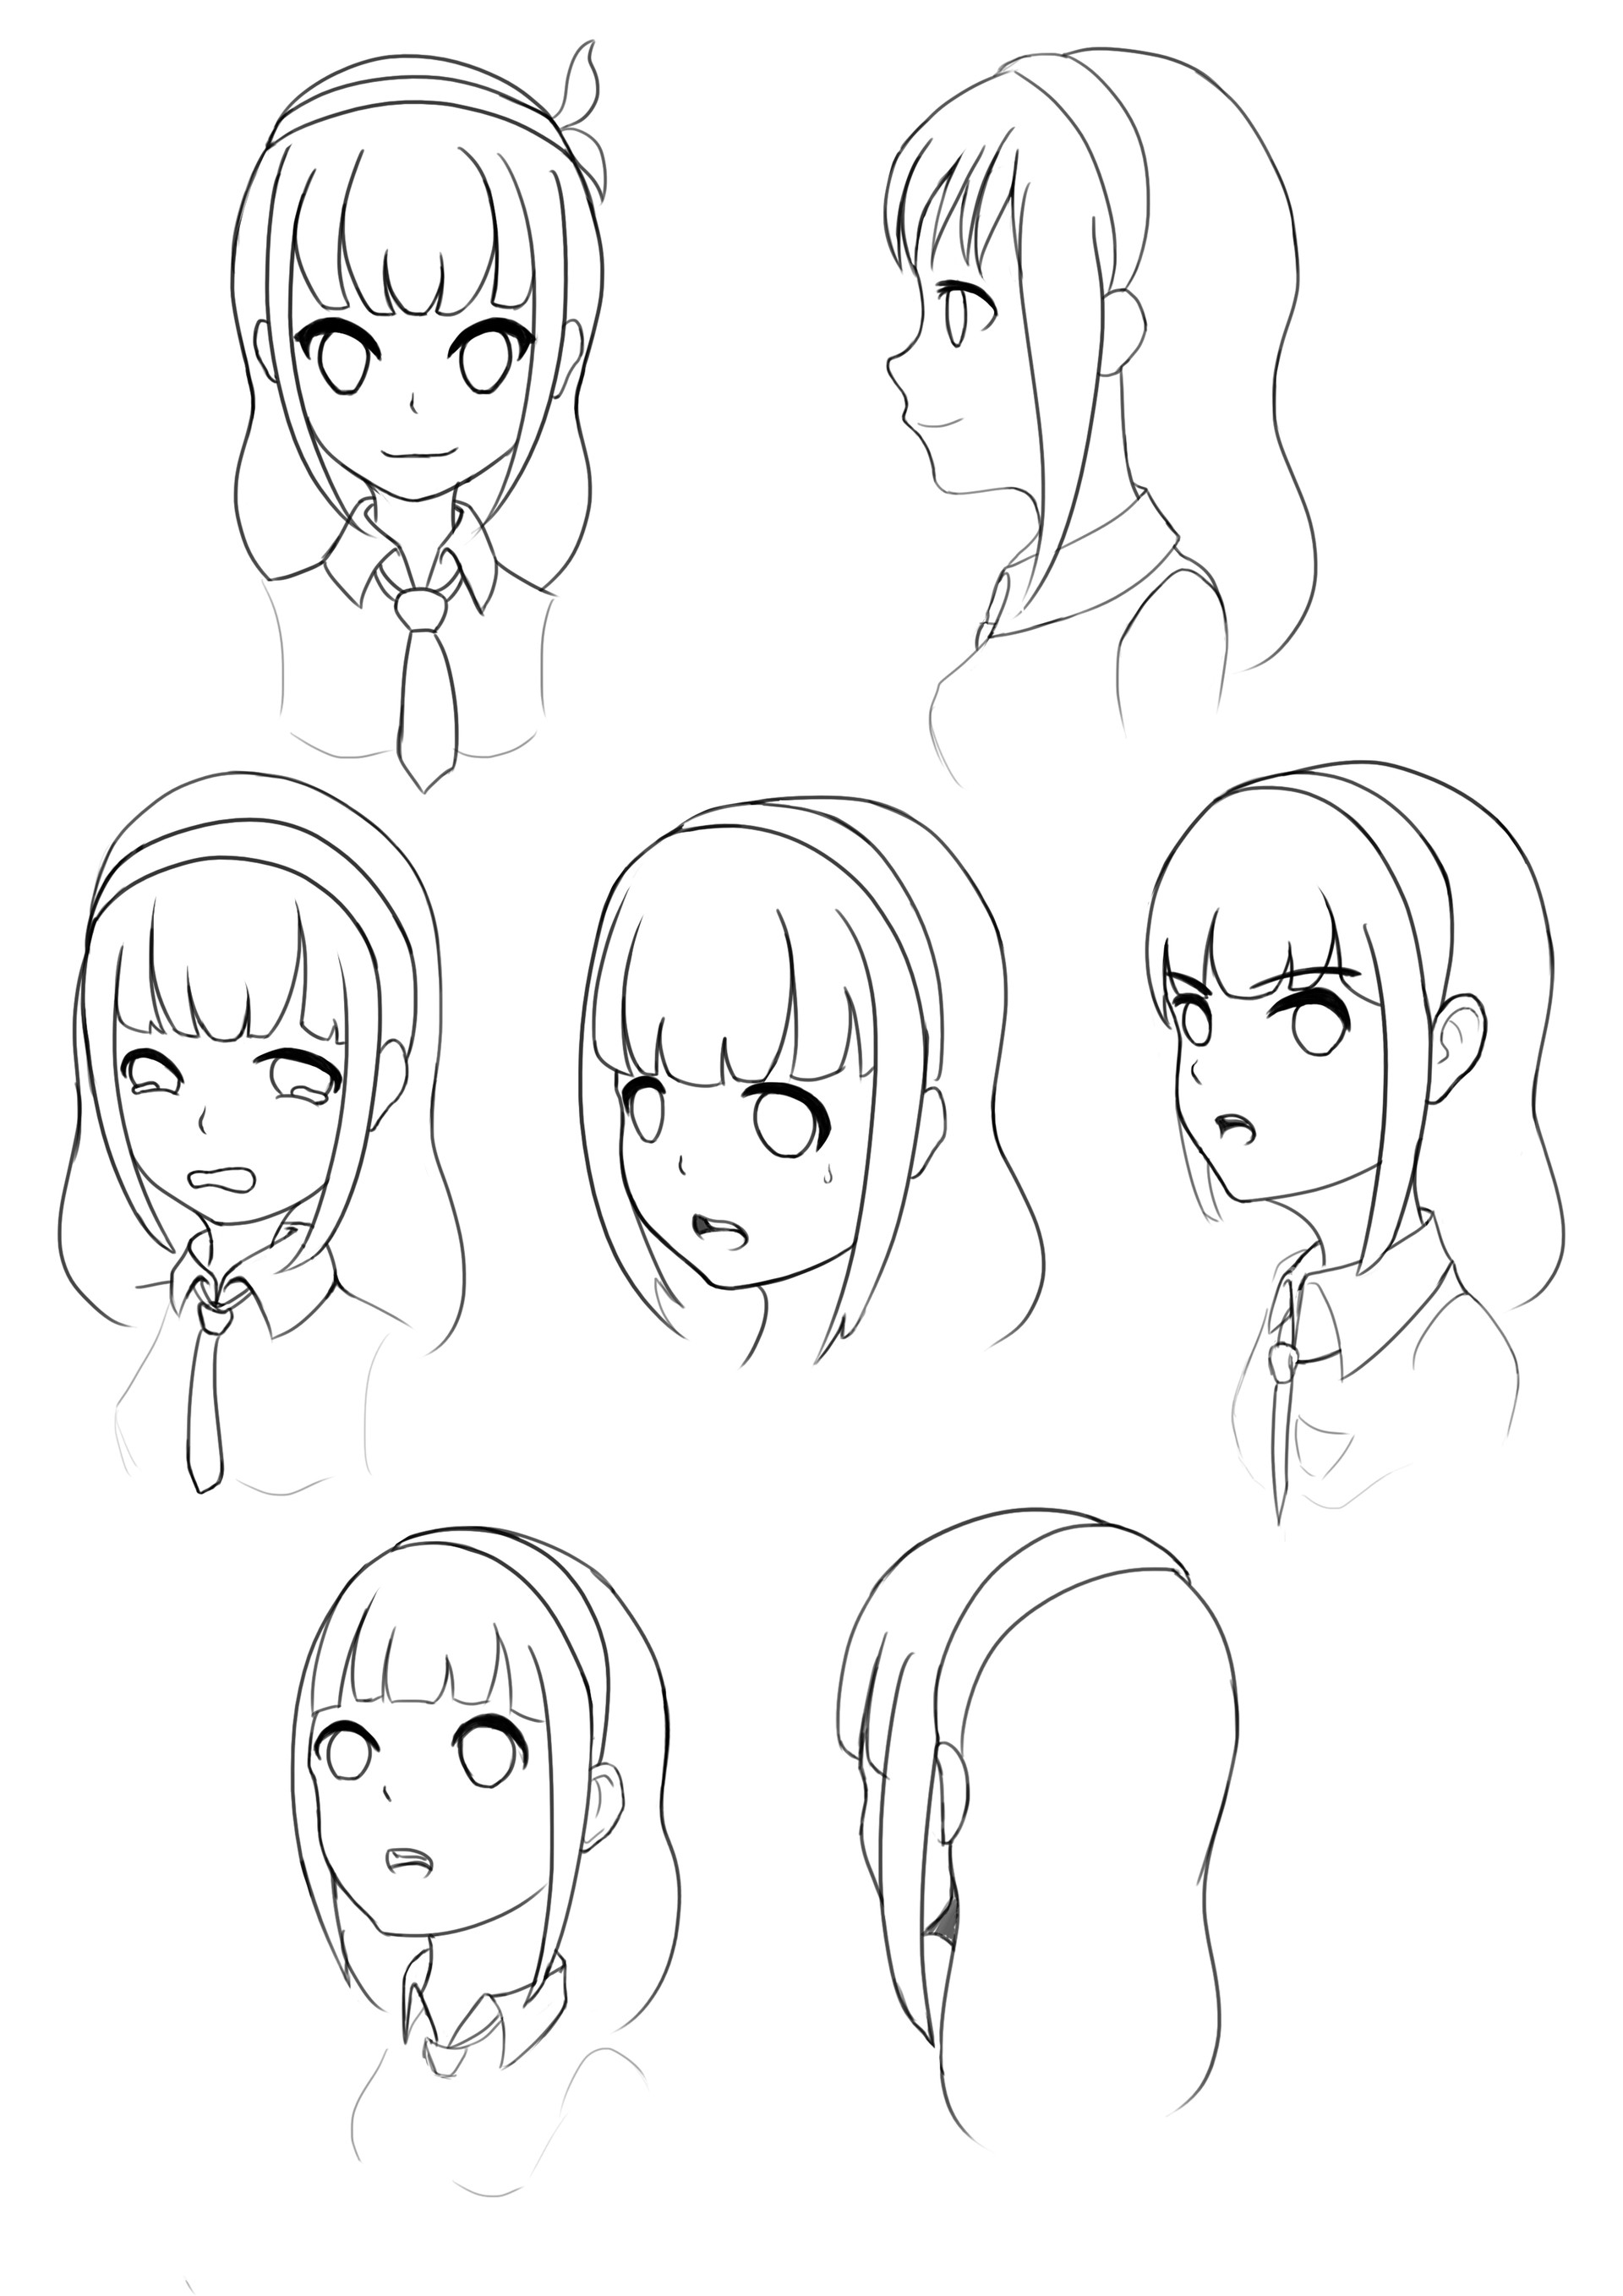 ArtStation - Manga Facial expressions study